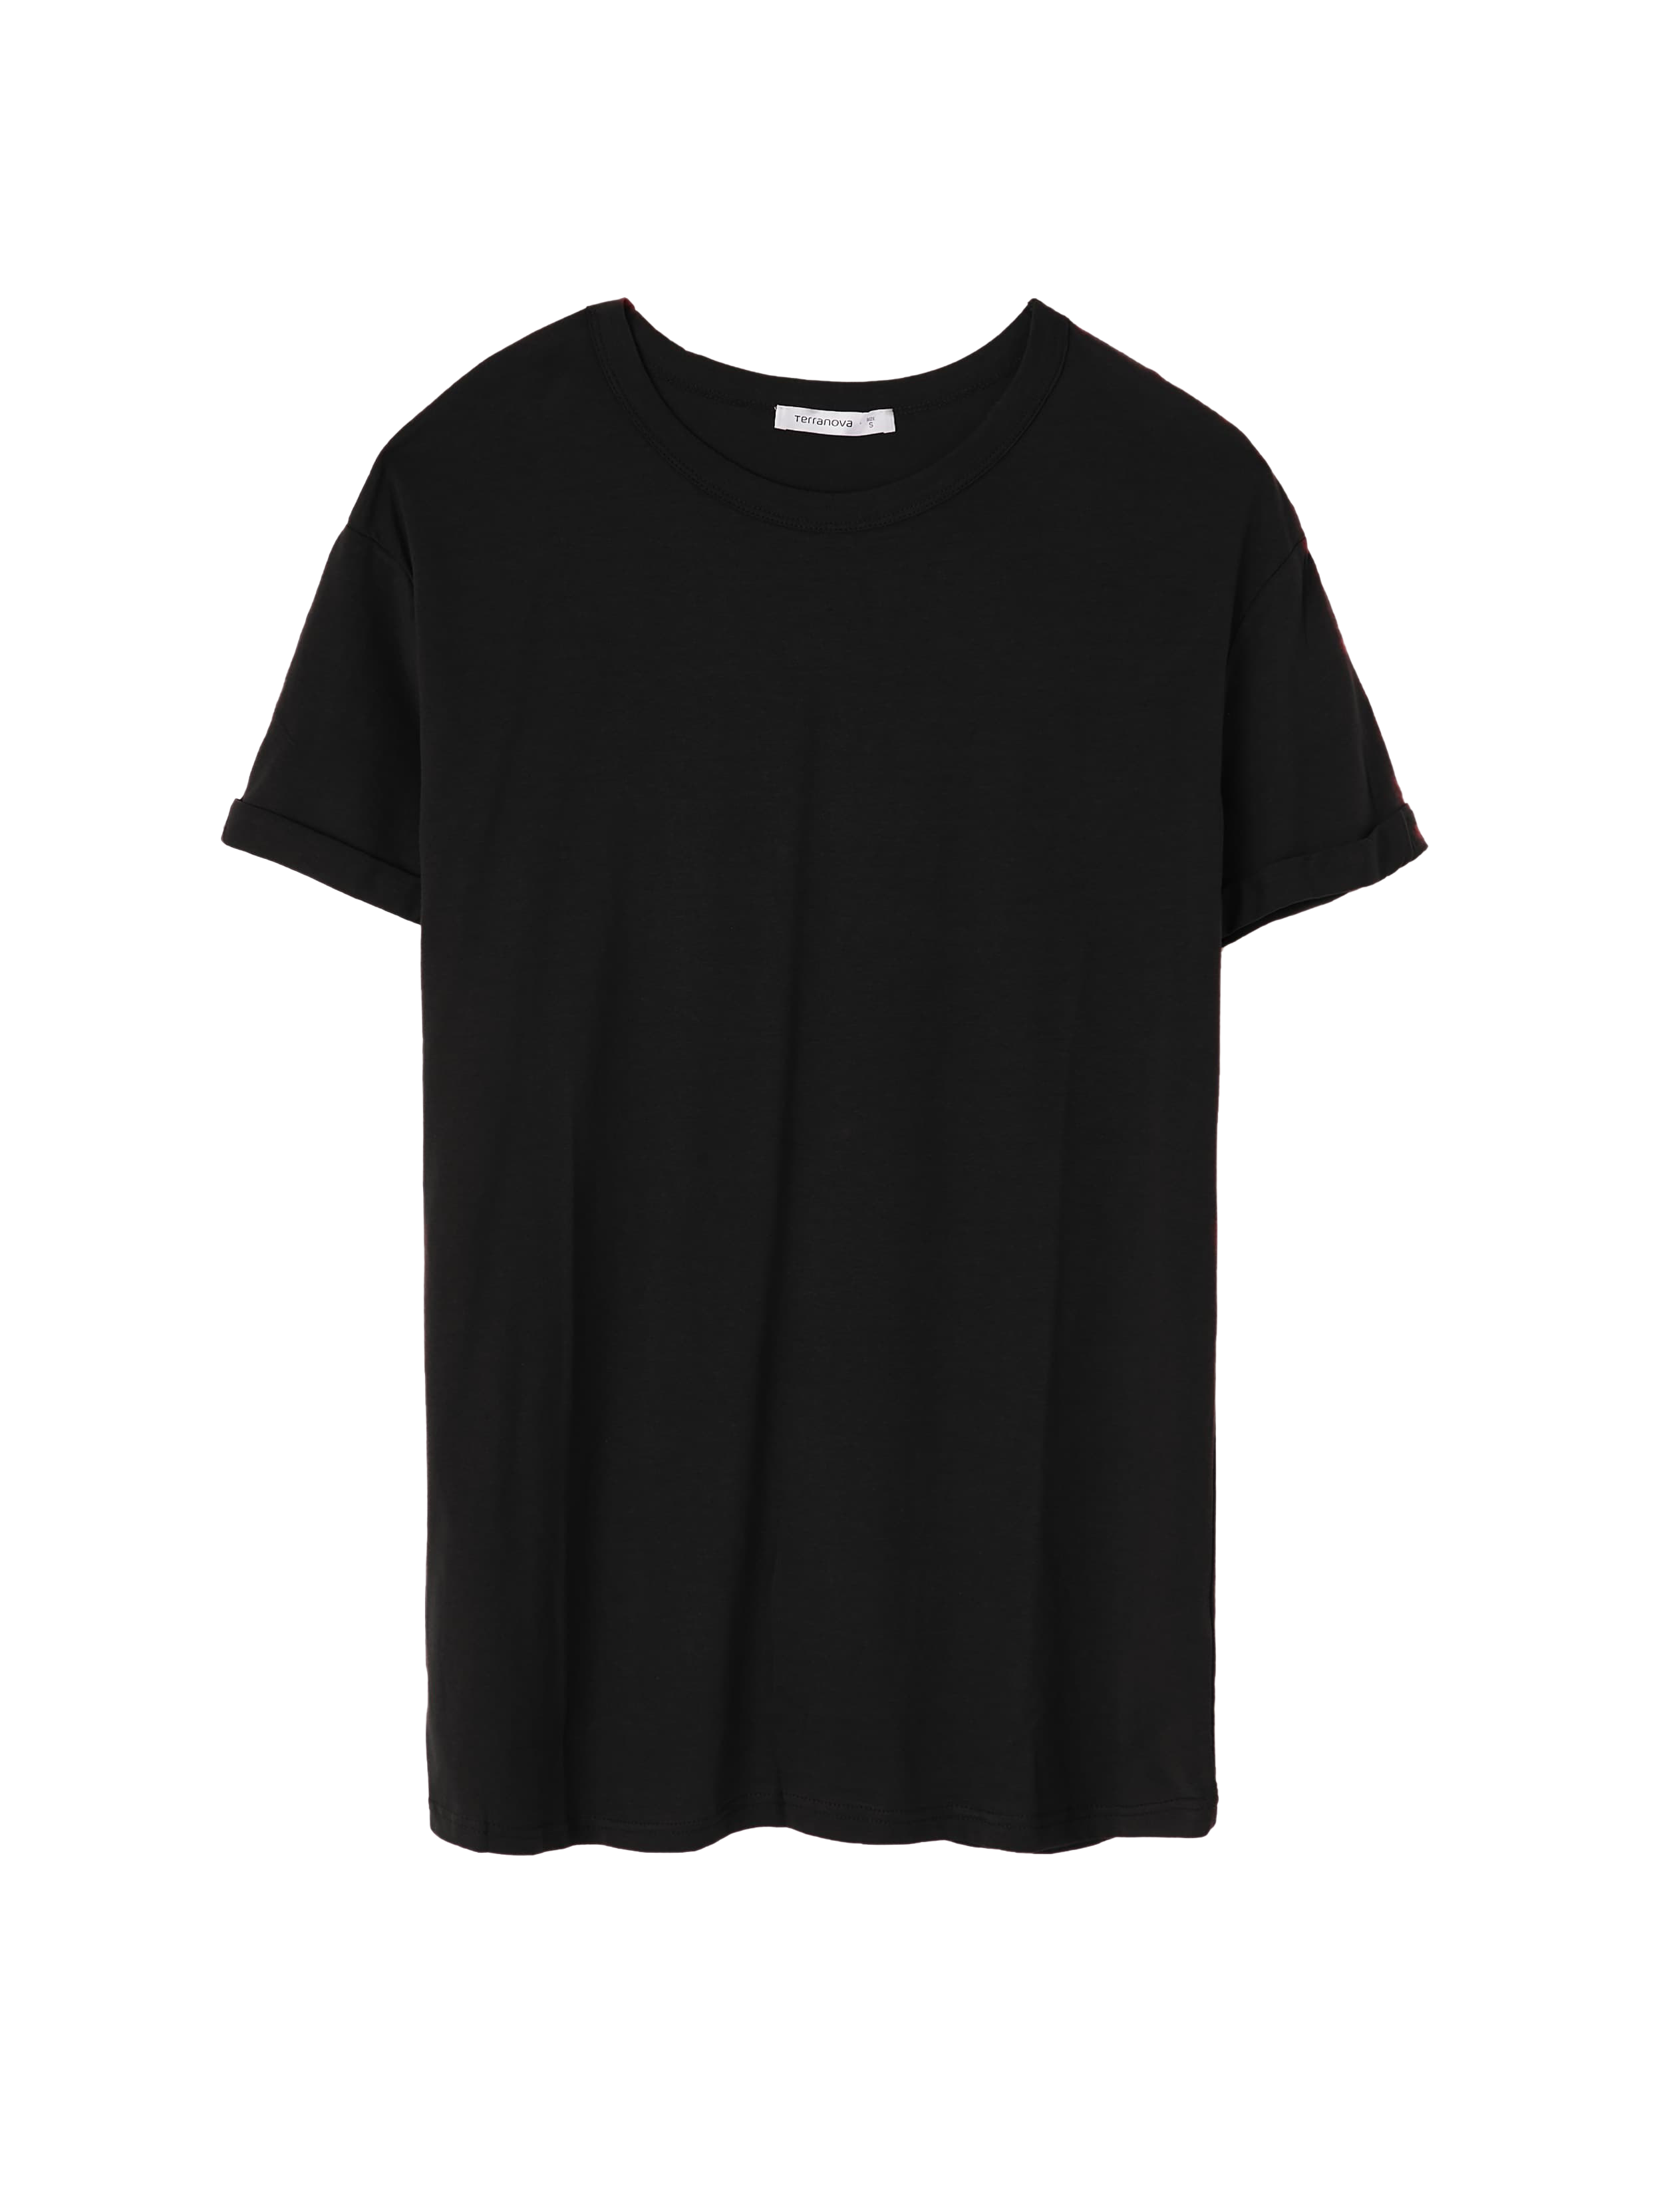 Buy > black t shirt png hd > in stock